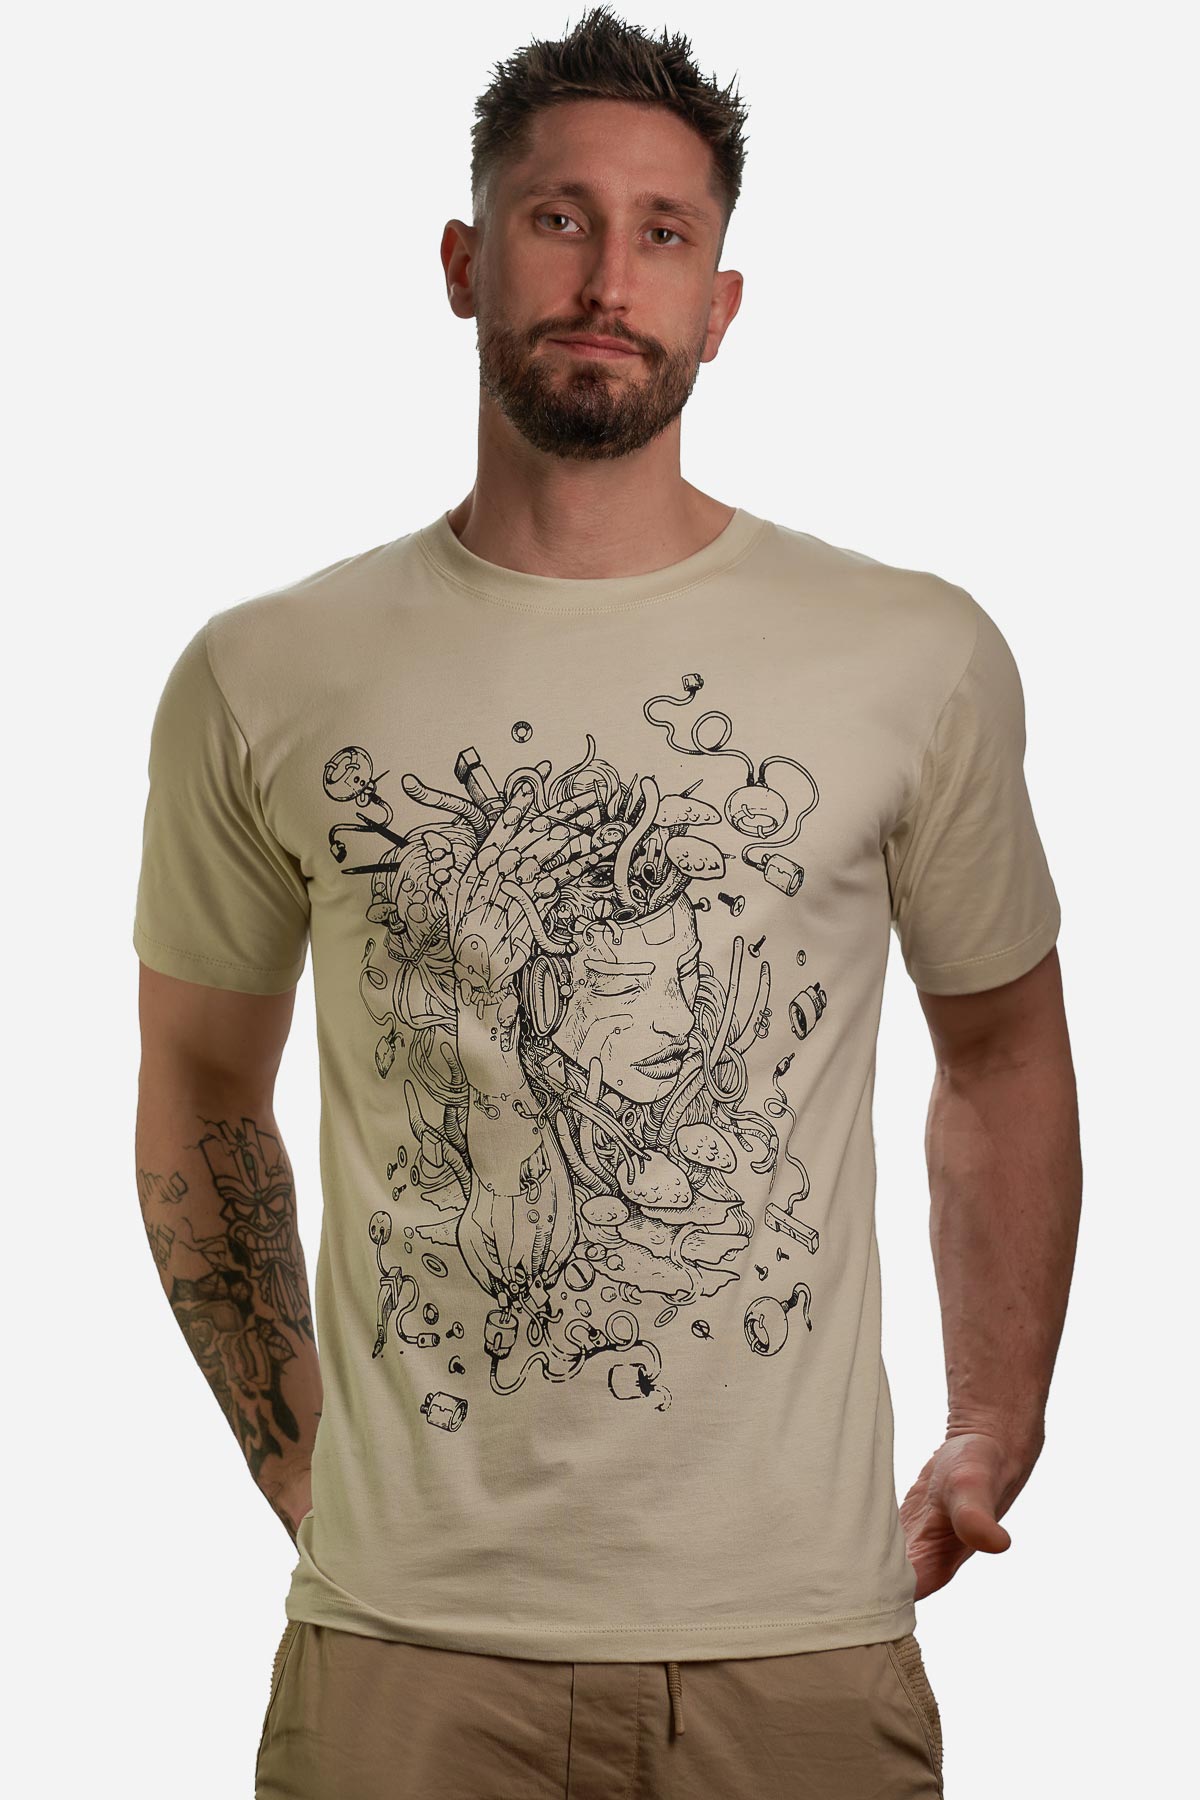 Bioborg T-shirt in sand for men, featuring handmade silk screen print, perfect for those seeking unique alternative streetwear.